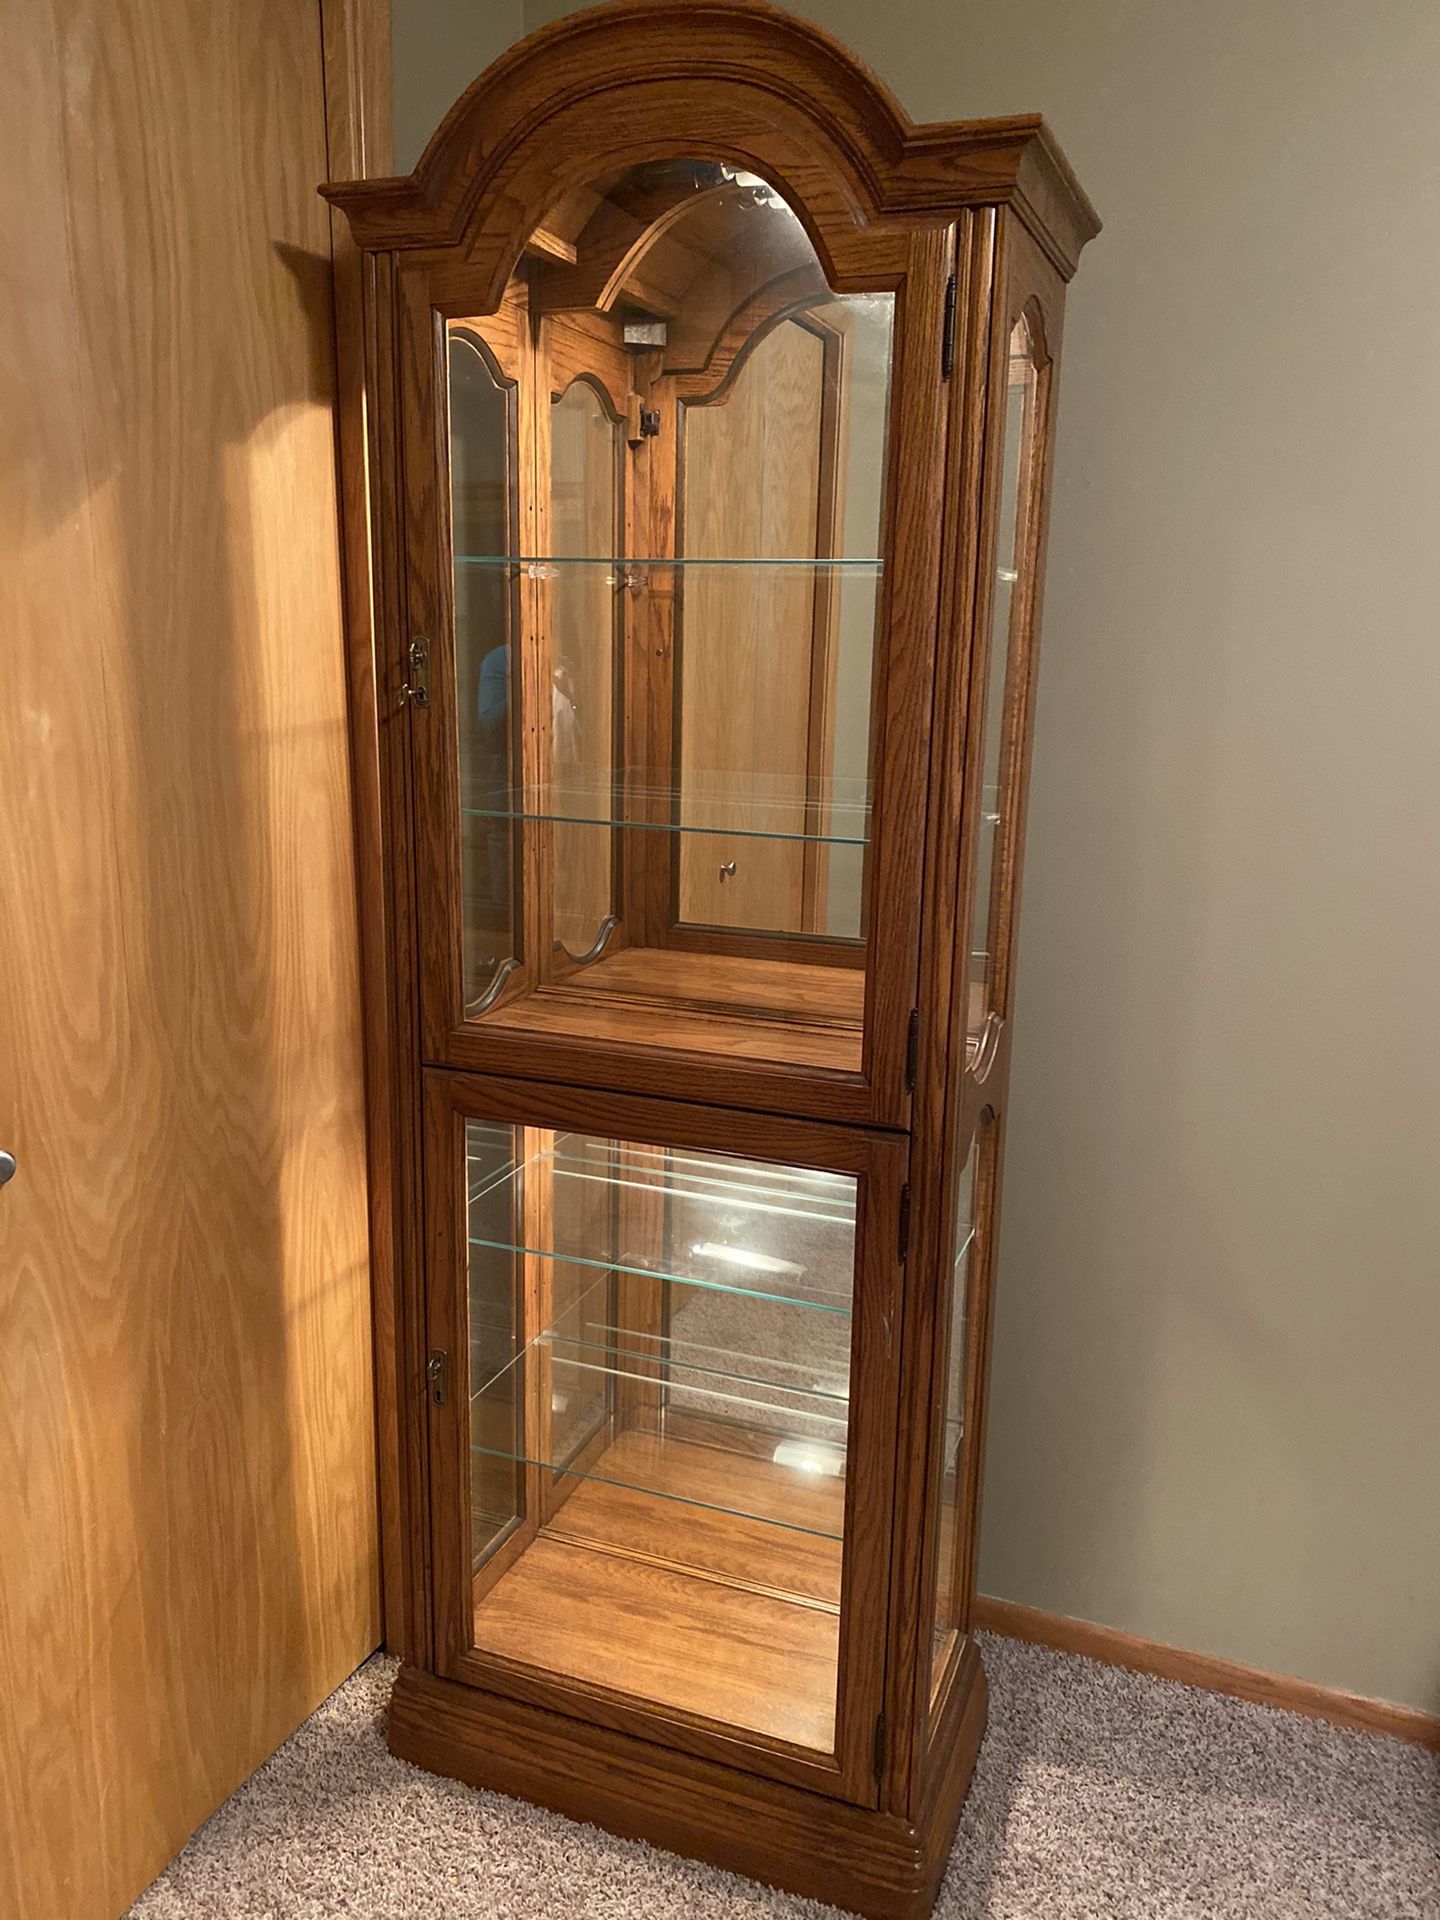 Six shelf light Curio Cabinet. Both upper and lower lock w/key.